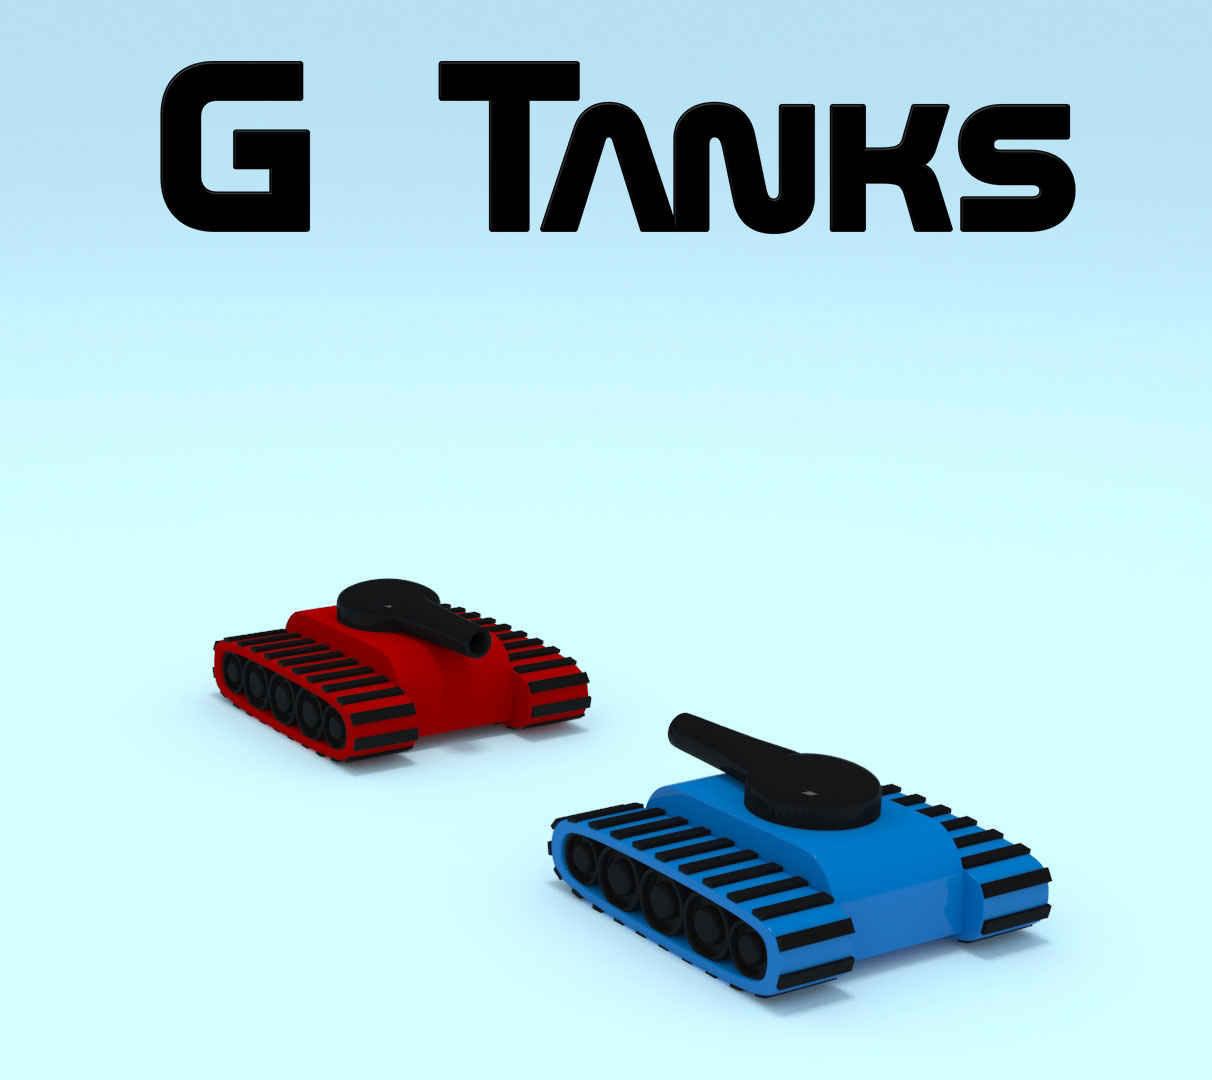 G Tanks by Matej Regina